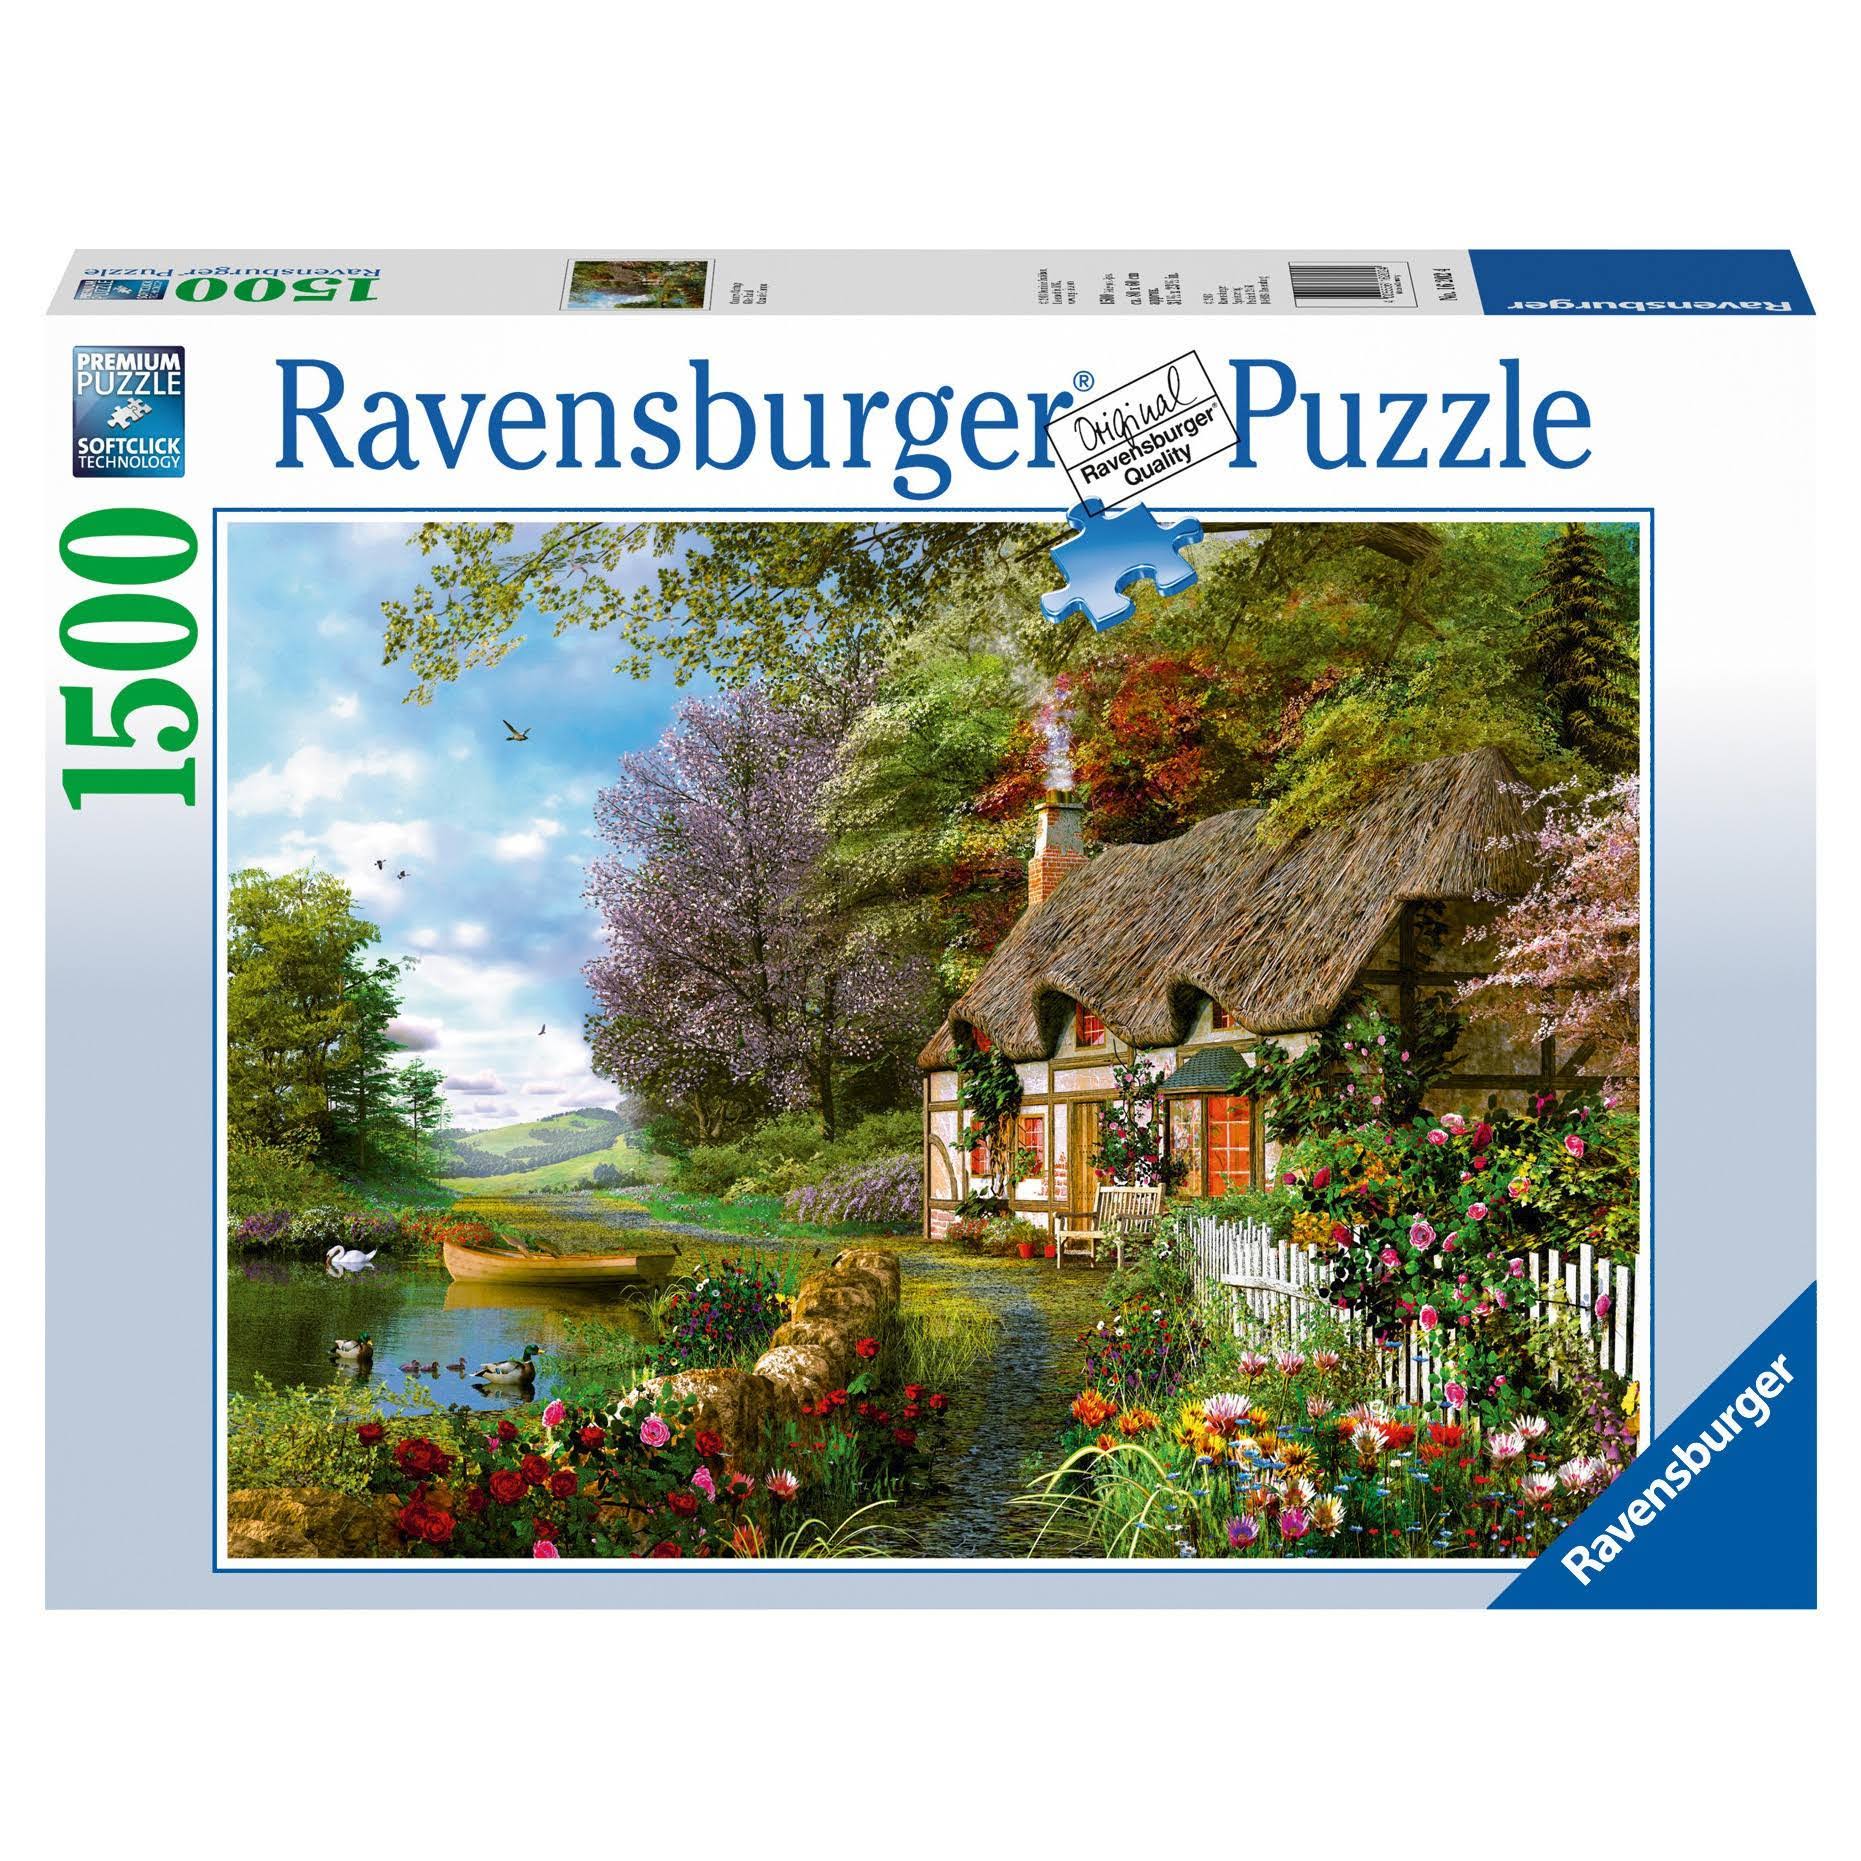 Ravensburger Jigsaw Puzzle - Country Cottage, 1500pcs